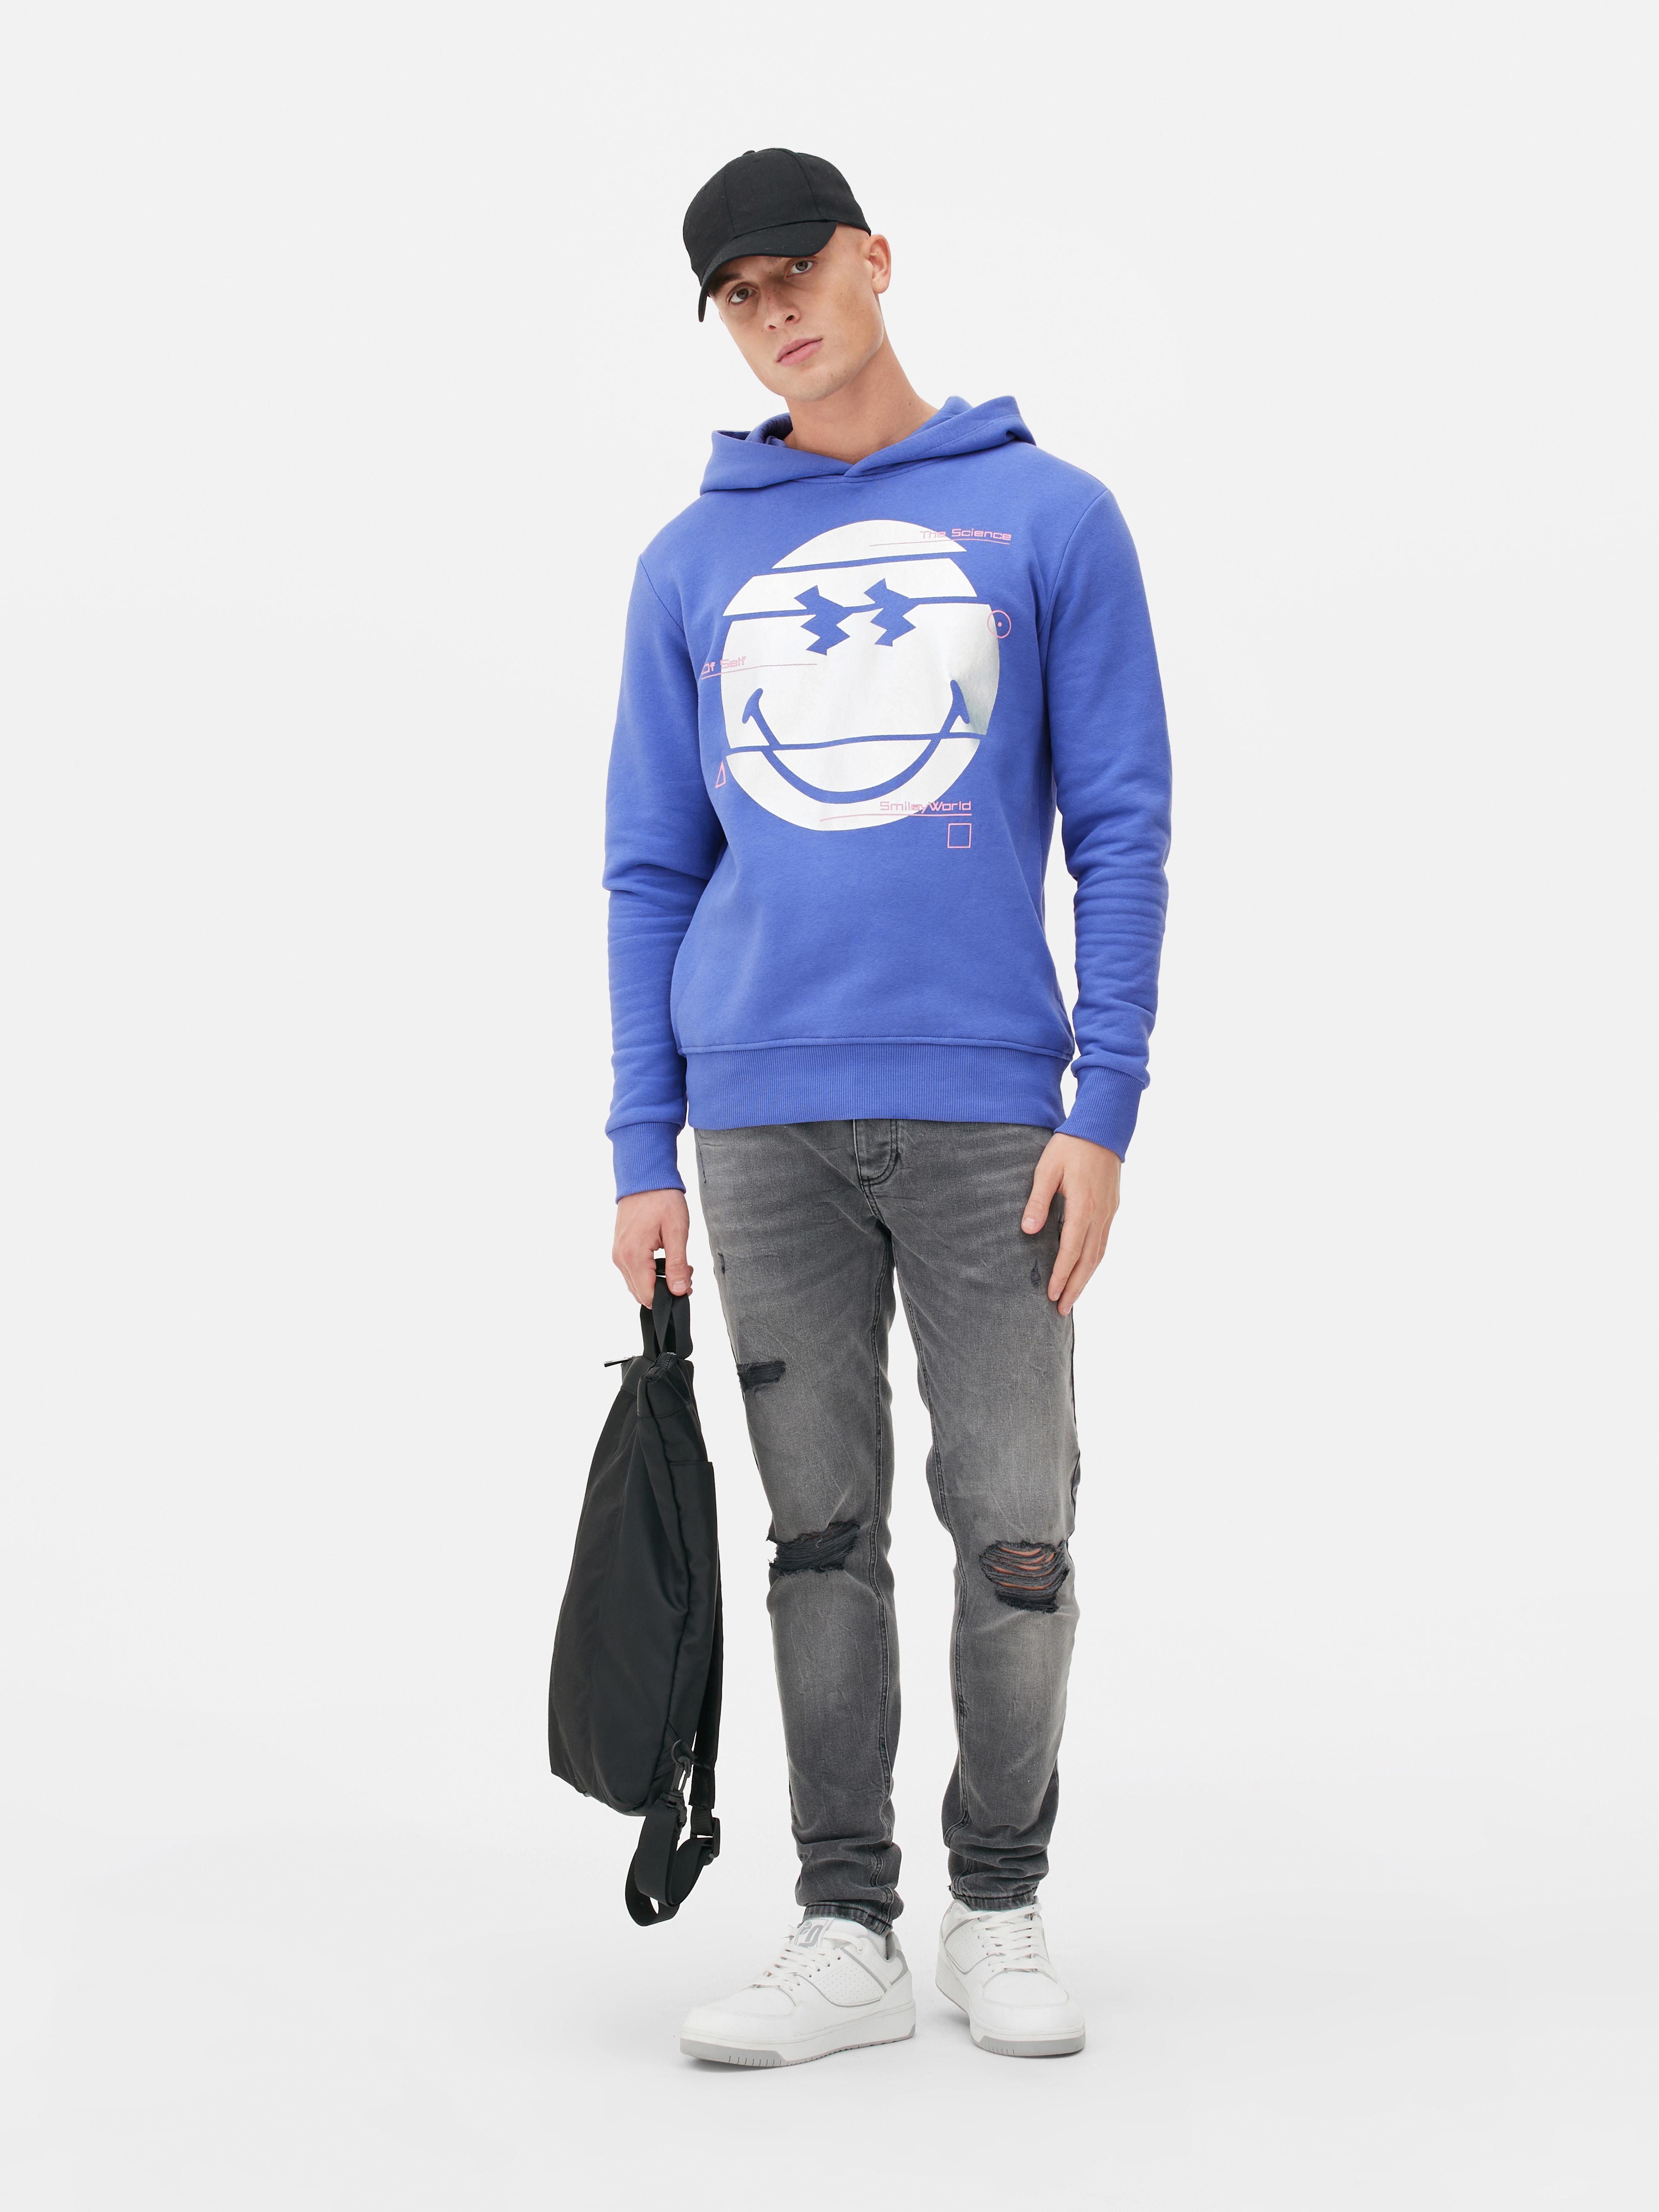 HERREN Pullovers & Sweatshirts Mit Reißverschluss Primark sweatshirt Rabatt 74 % Grau M 